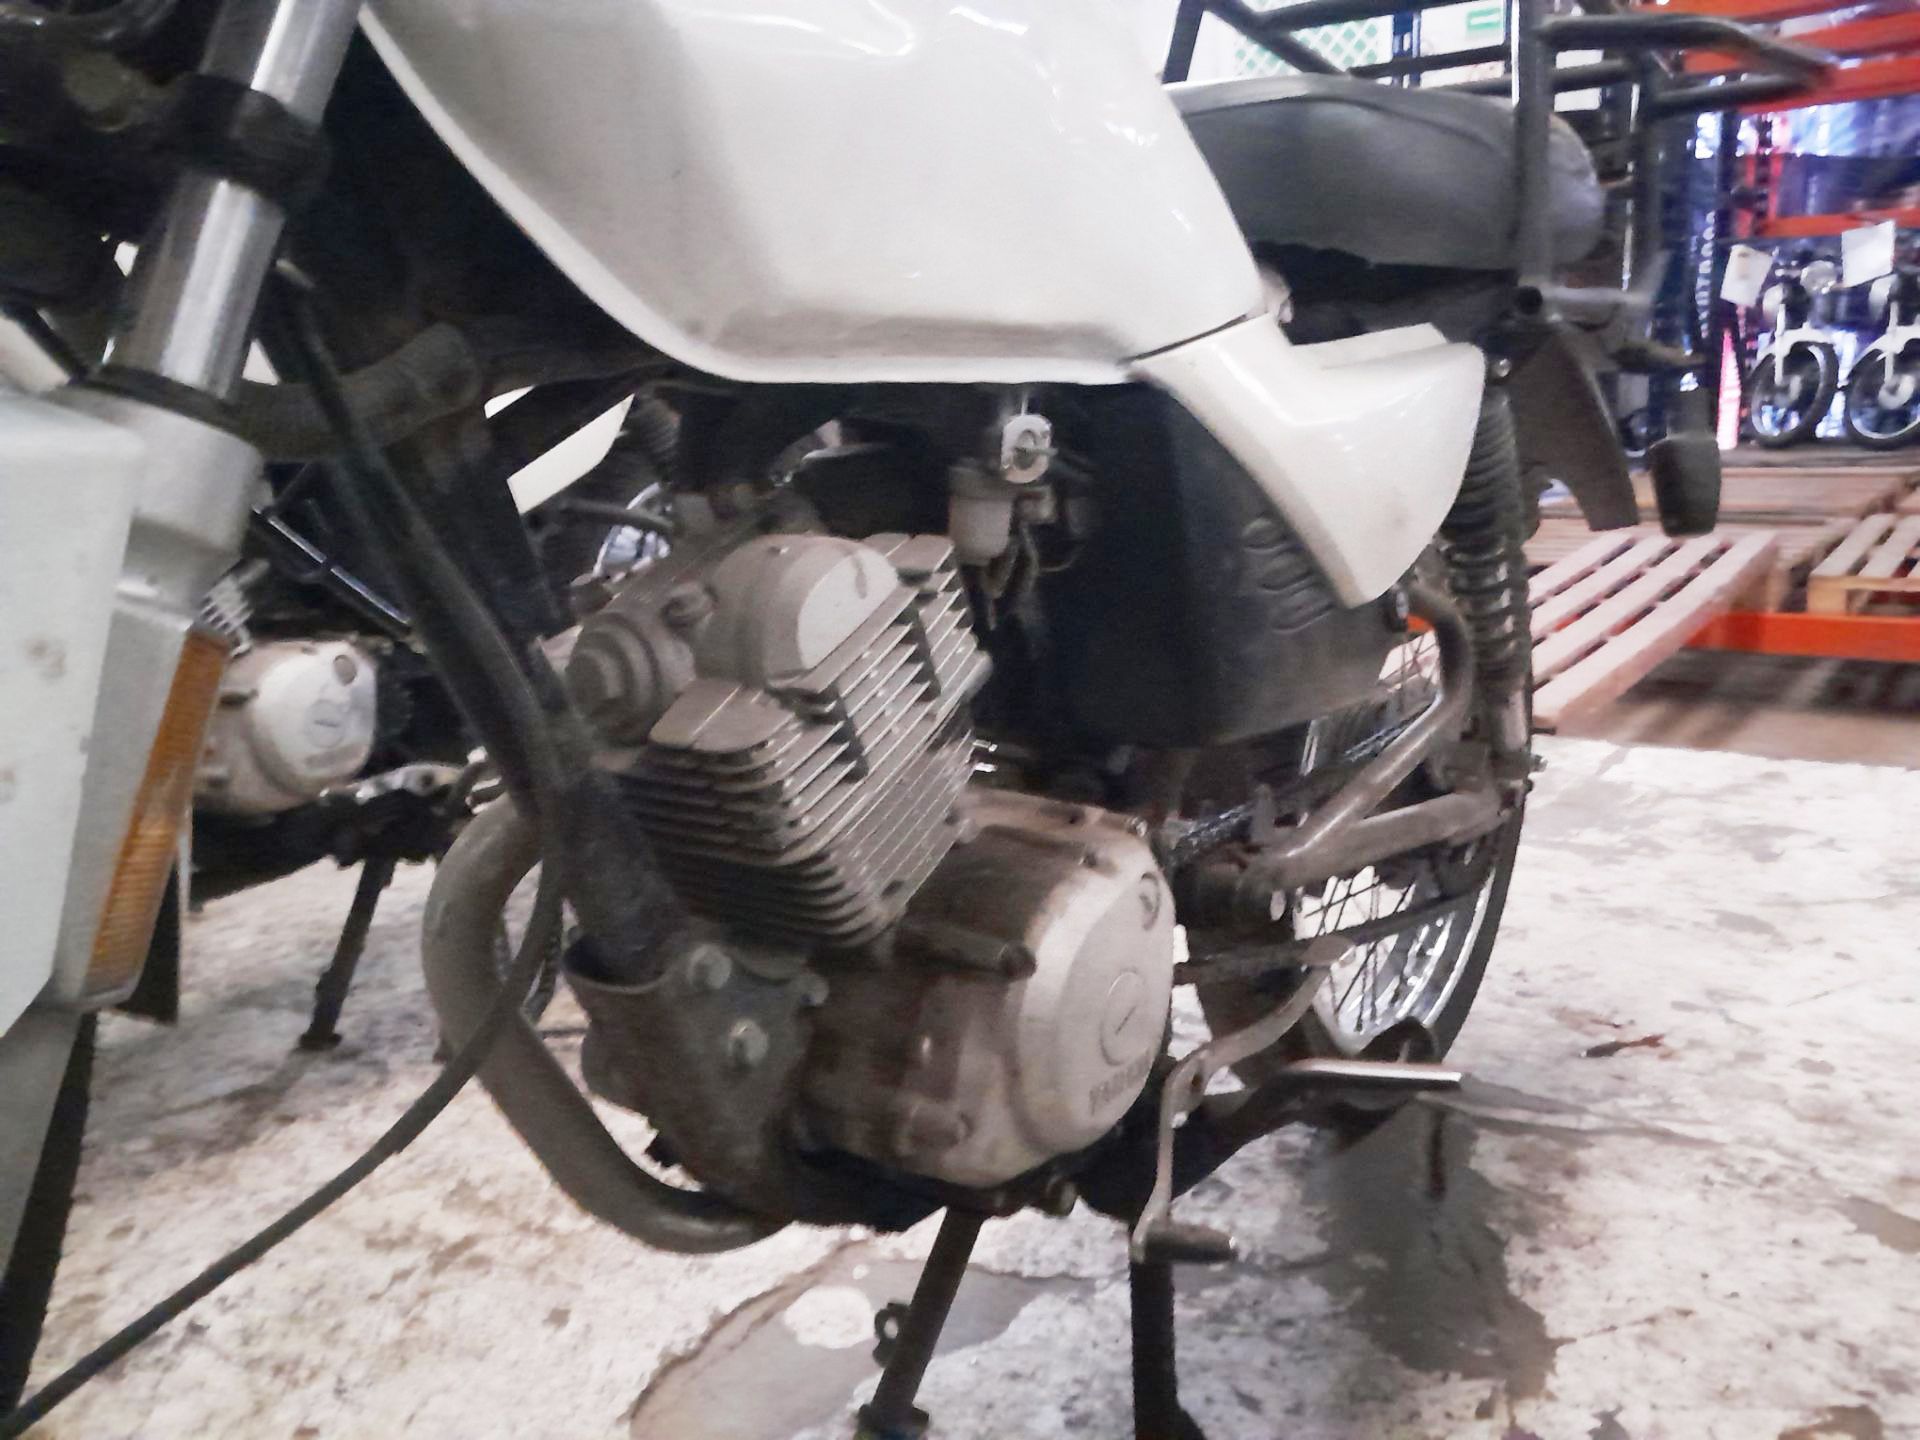 1 Motocicleta de trabajo usada Marca Yamaha YB 125, Modelo 2015, No de serie LBPKE0976F0491231, No - Image 3 of 8